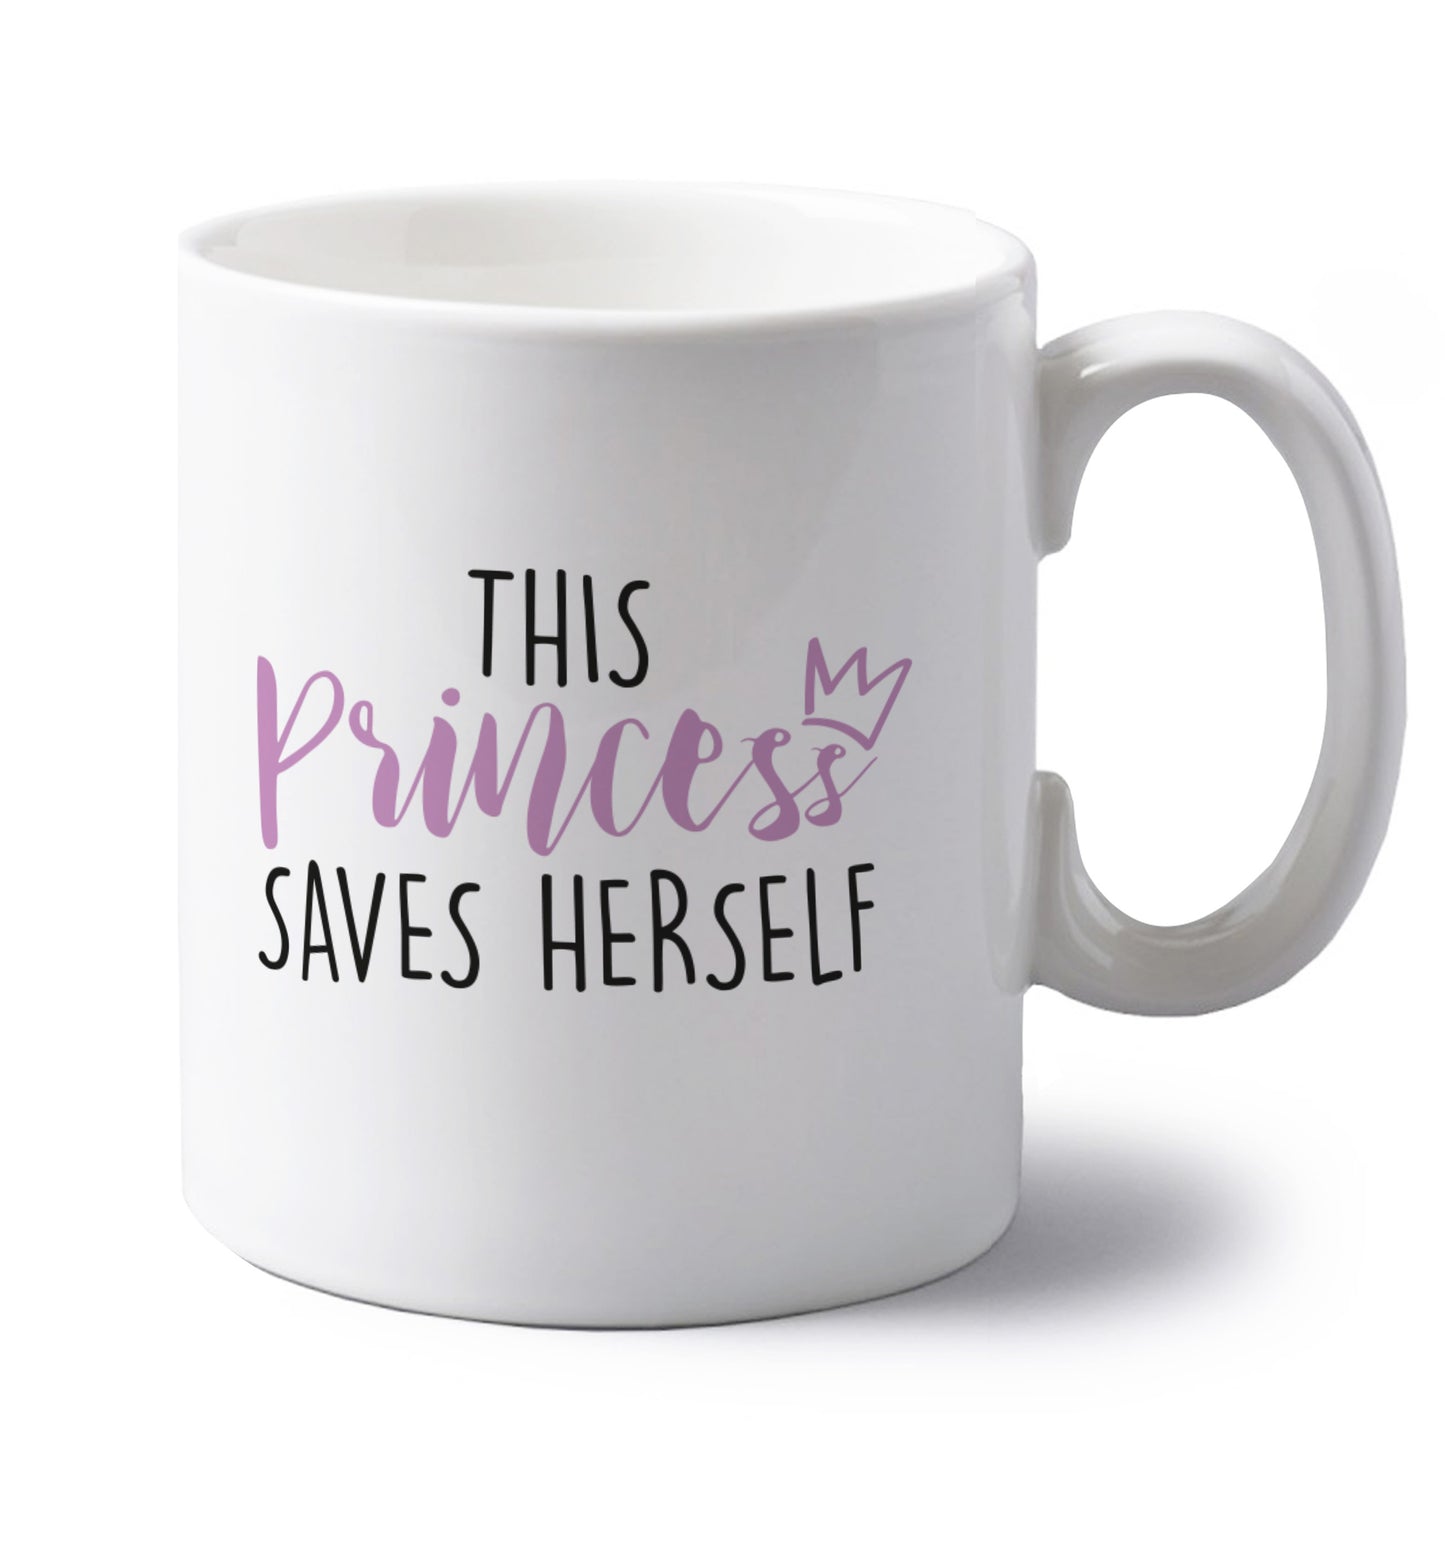 This princess saves herself left handed white ceramic mug 